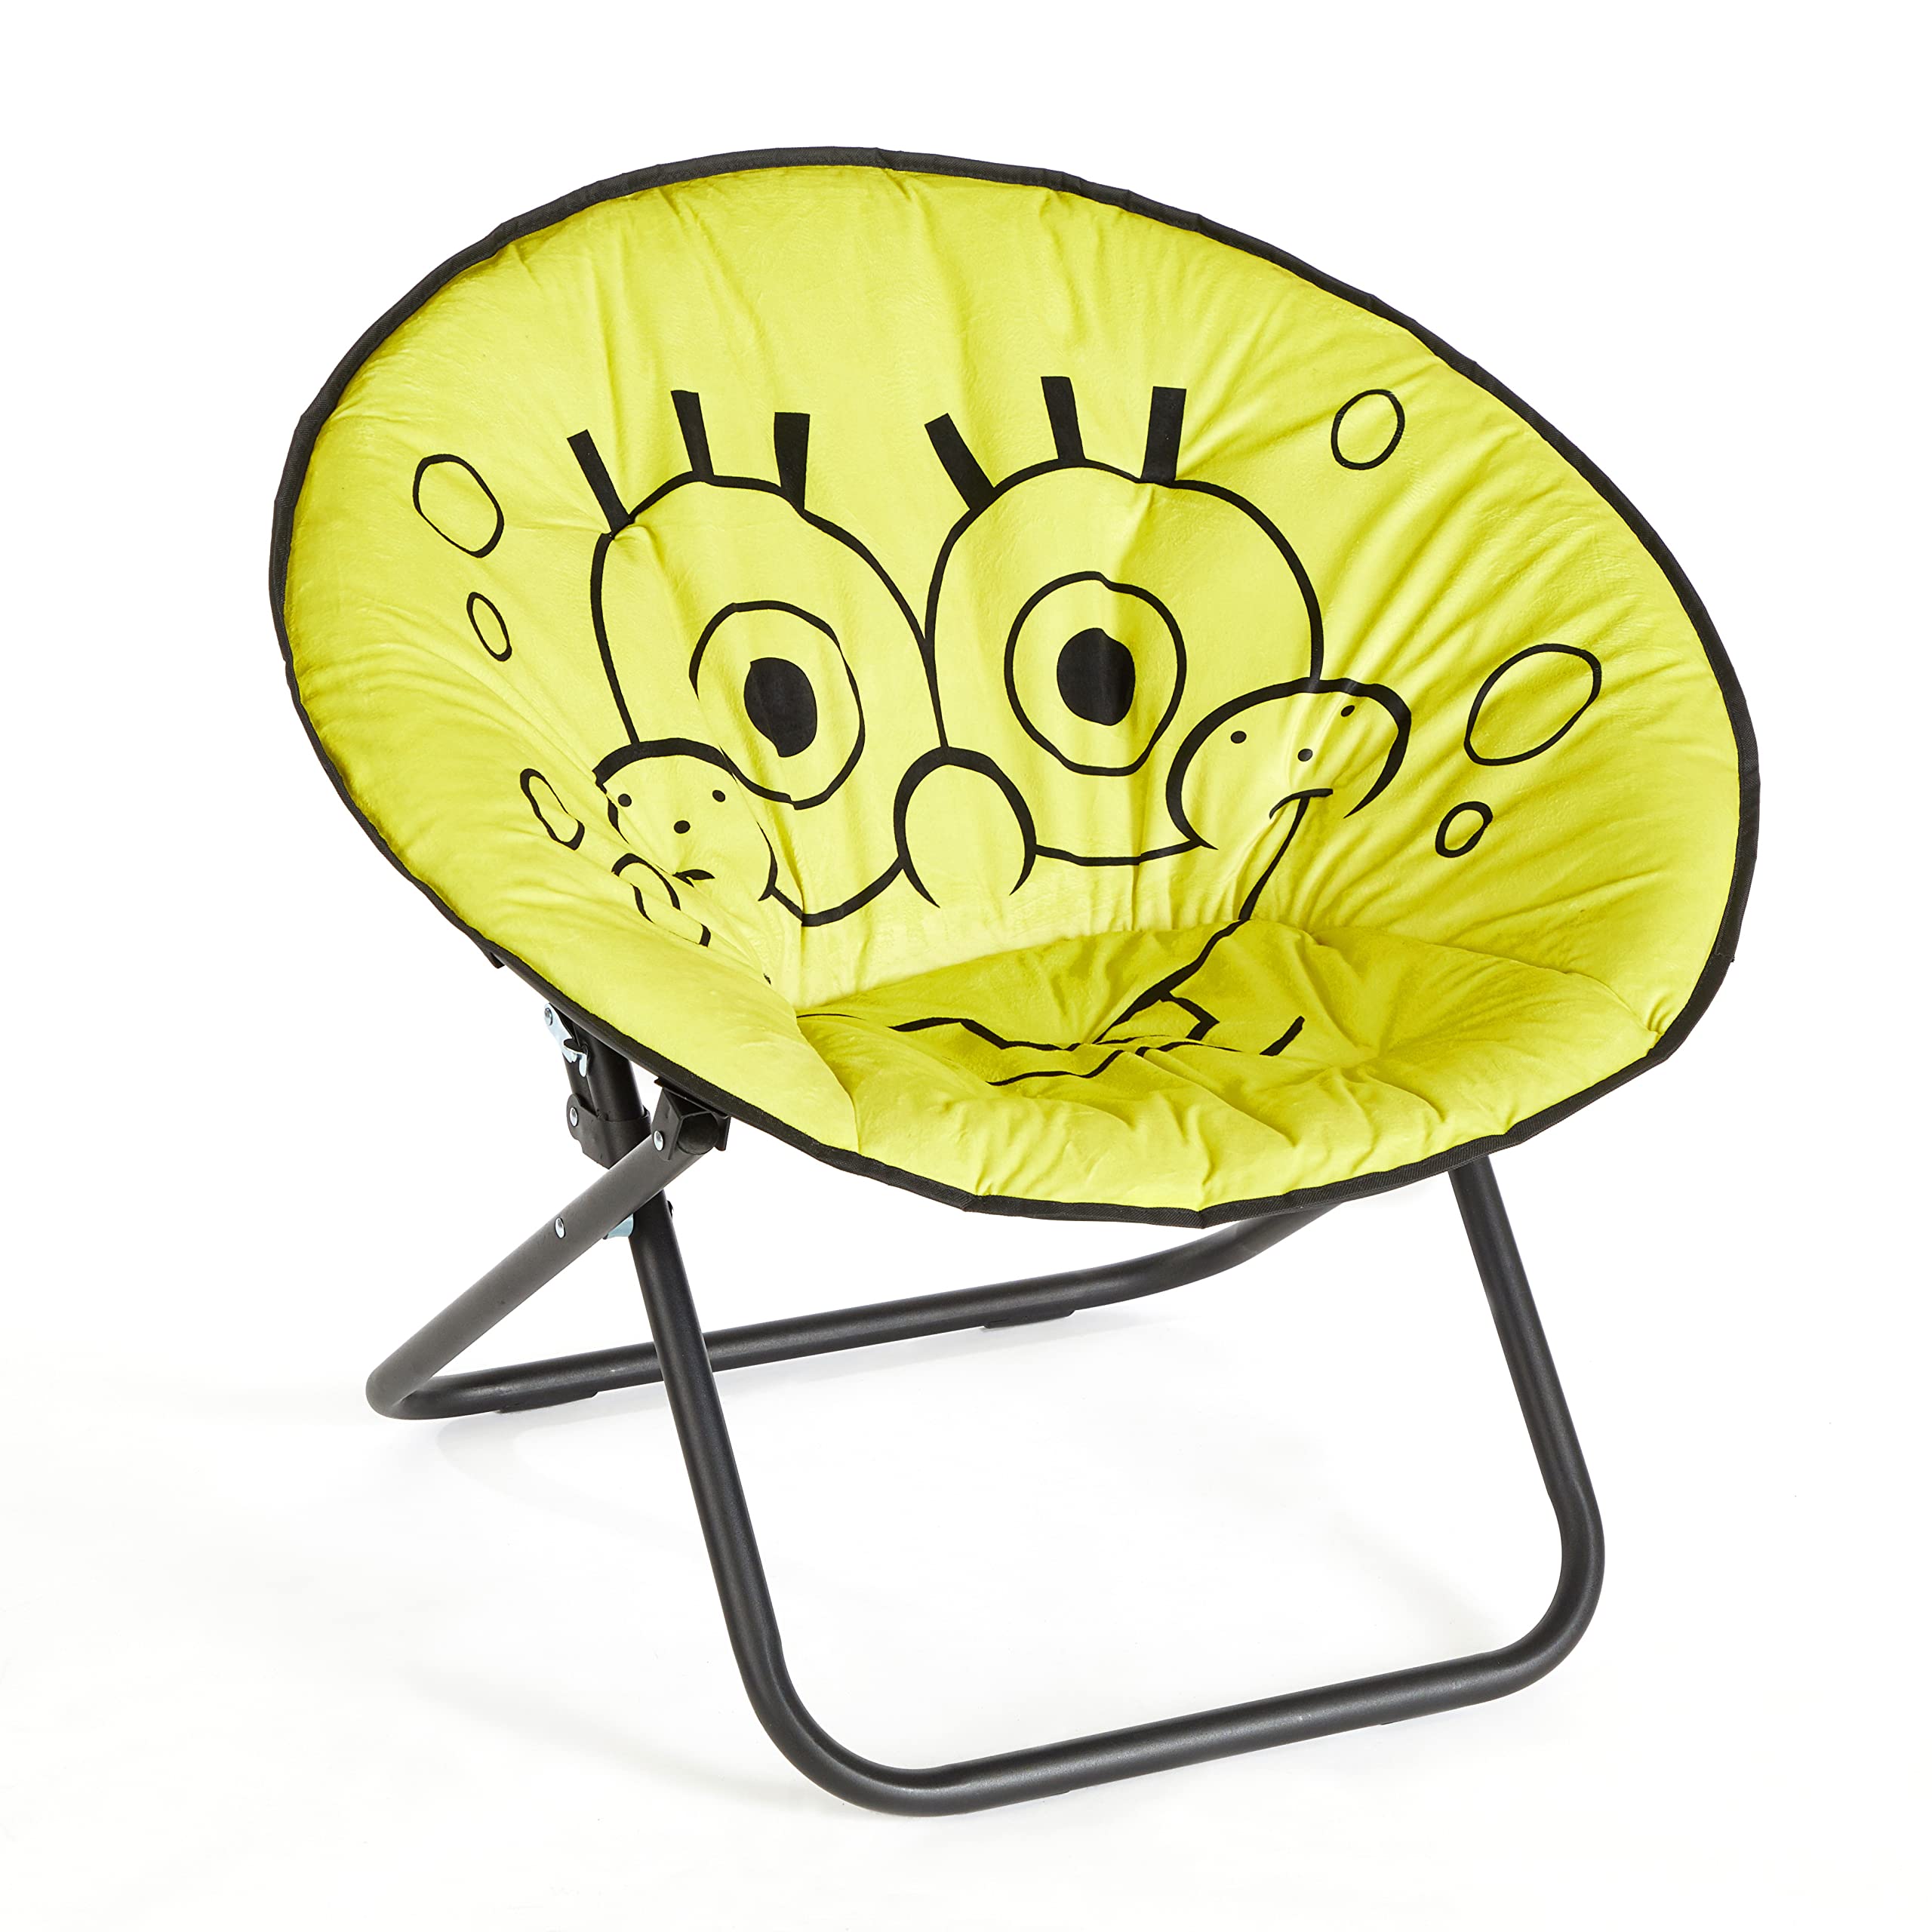 30" Nickelodeon Spongebob Squarepants Oversized Folding Saucer Chair w/ Metal Frame $35 + Free Shipping